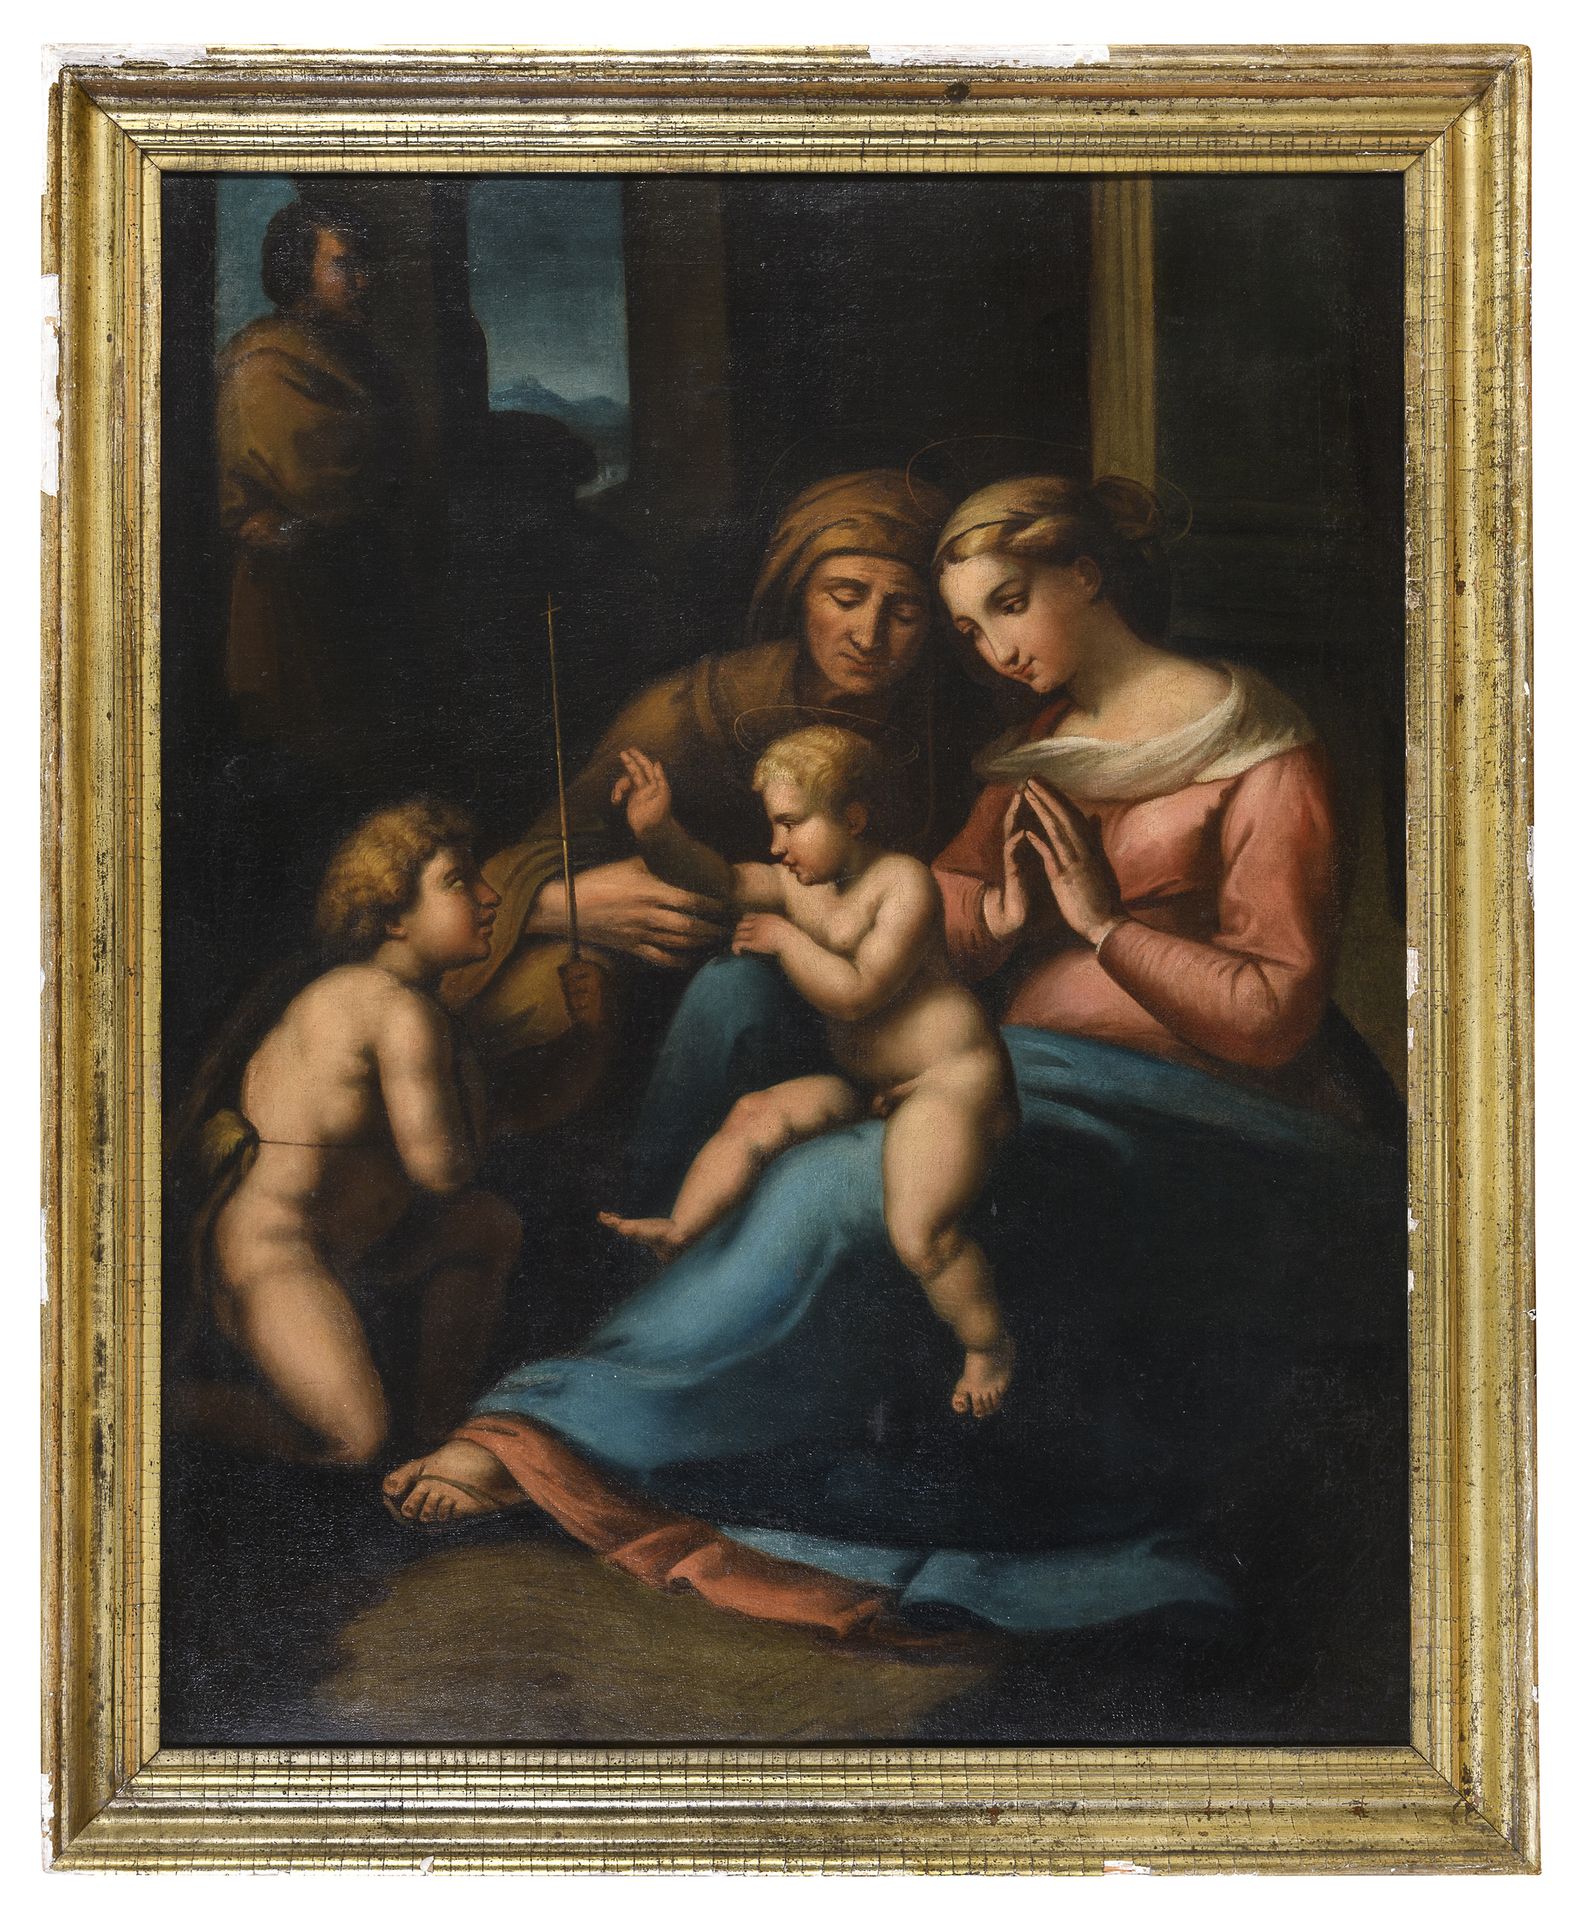 Null 罗马画家，18世纪



圣约翰和圣伊丽莎白的神圣家庭，拉斐尔的作品

布面油画，96 x 76厘米



框架

镀金木框，19世纪（缺陷）